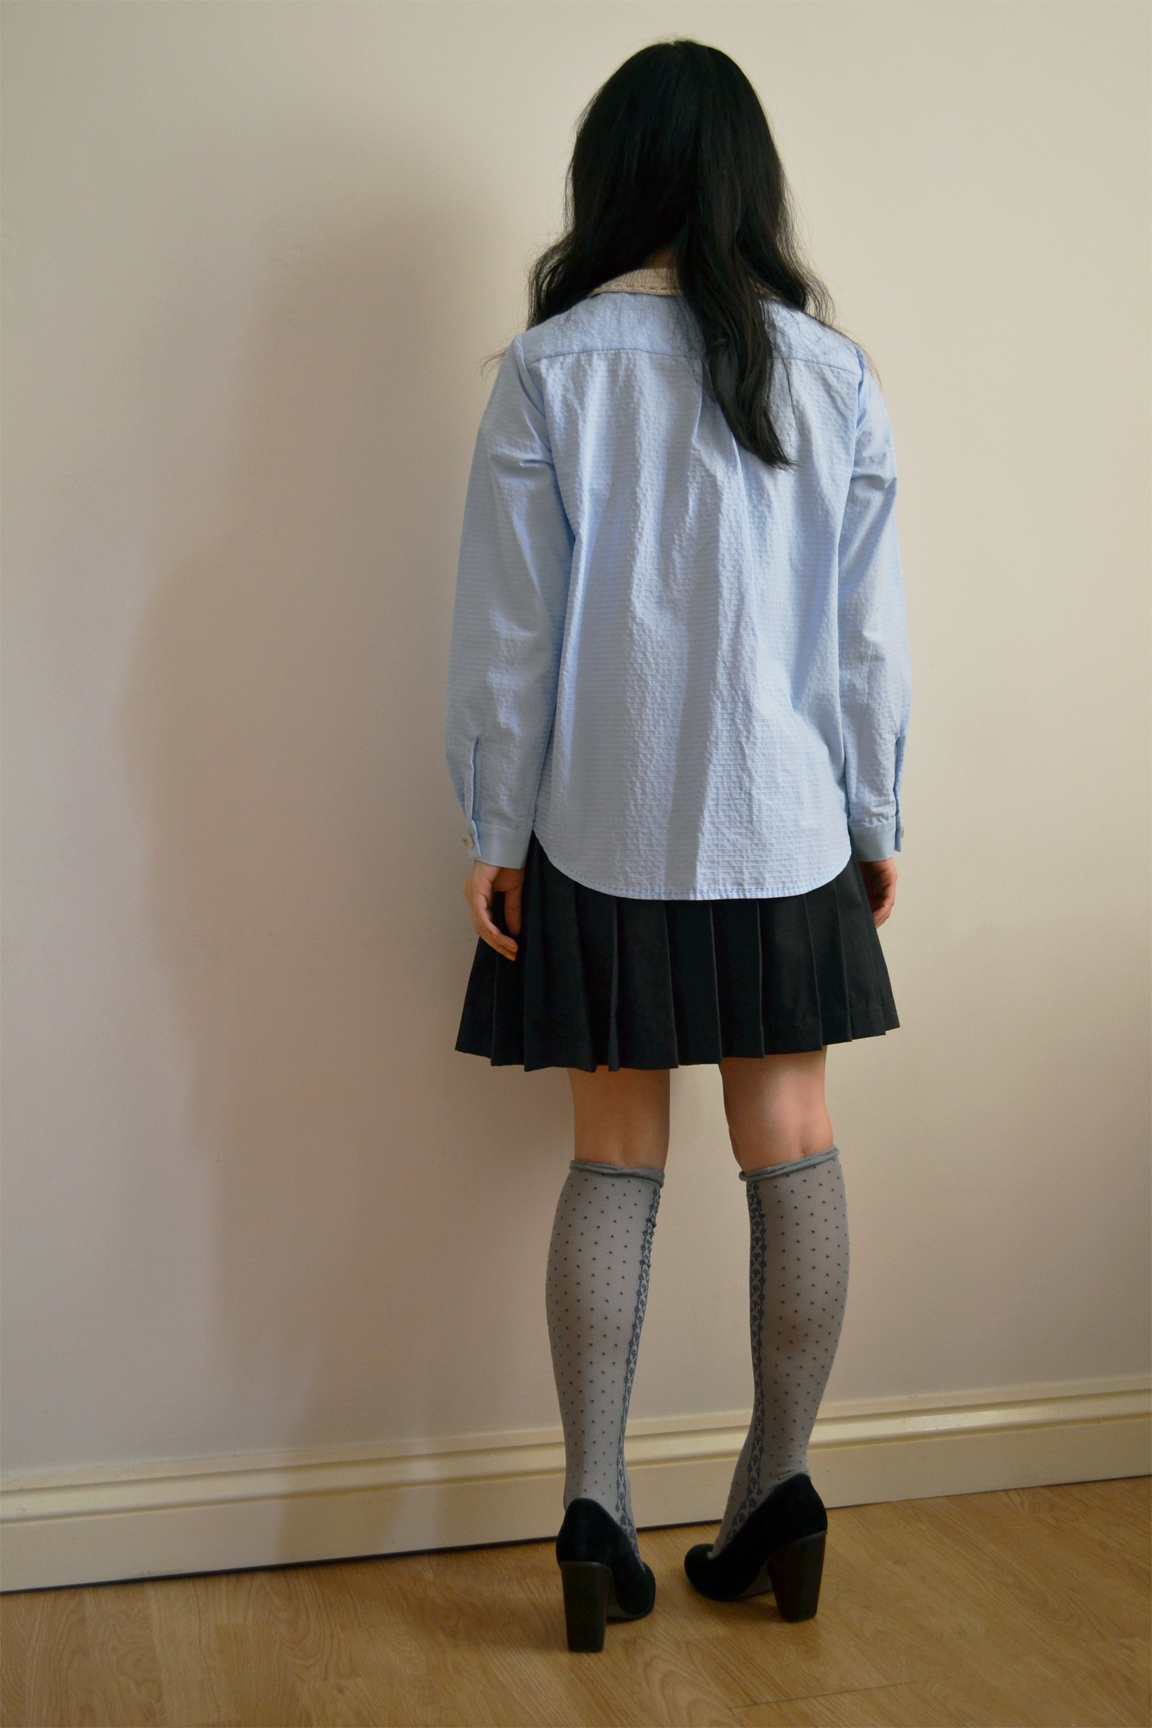 the Smart Girl's pleated skirt and full look - Minus Sun